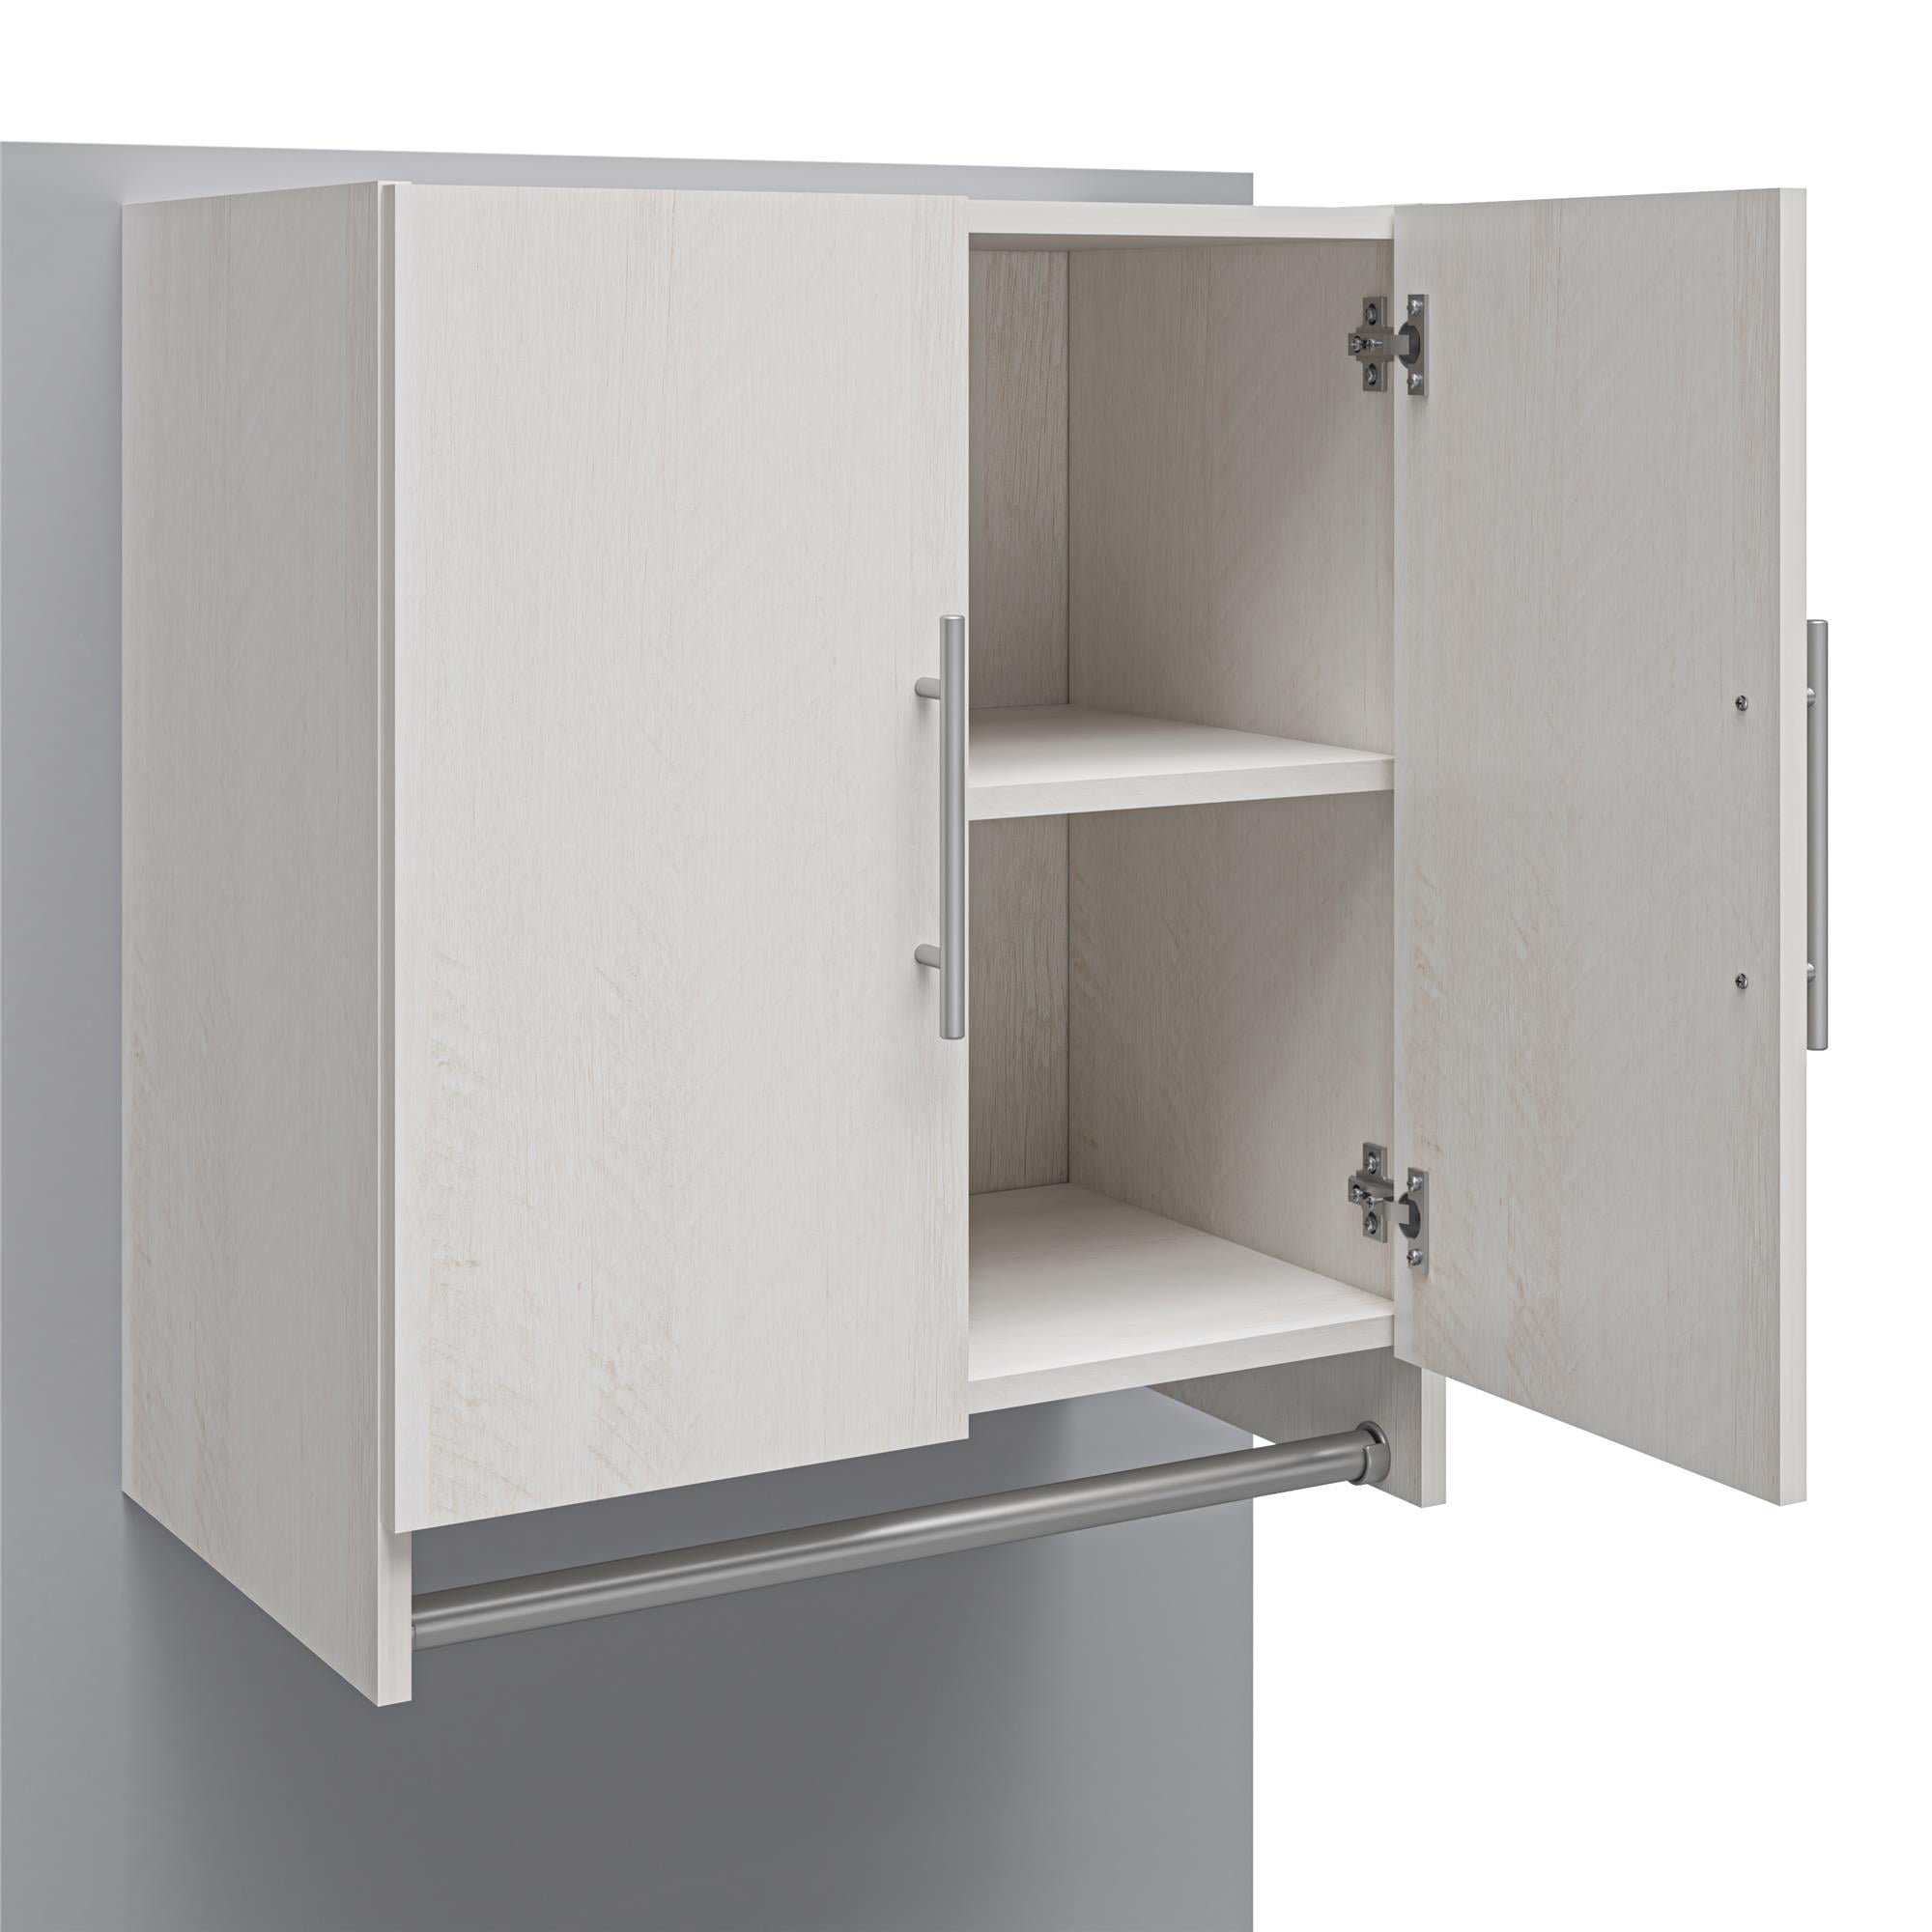 Systembuild Evolution Westford Garage Storage 3 Door Wall Cabinet with  Hanging Rod, Ivory Oak